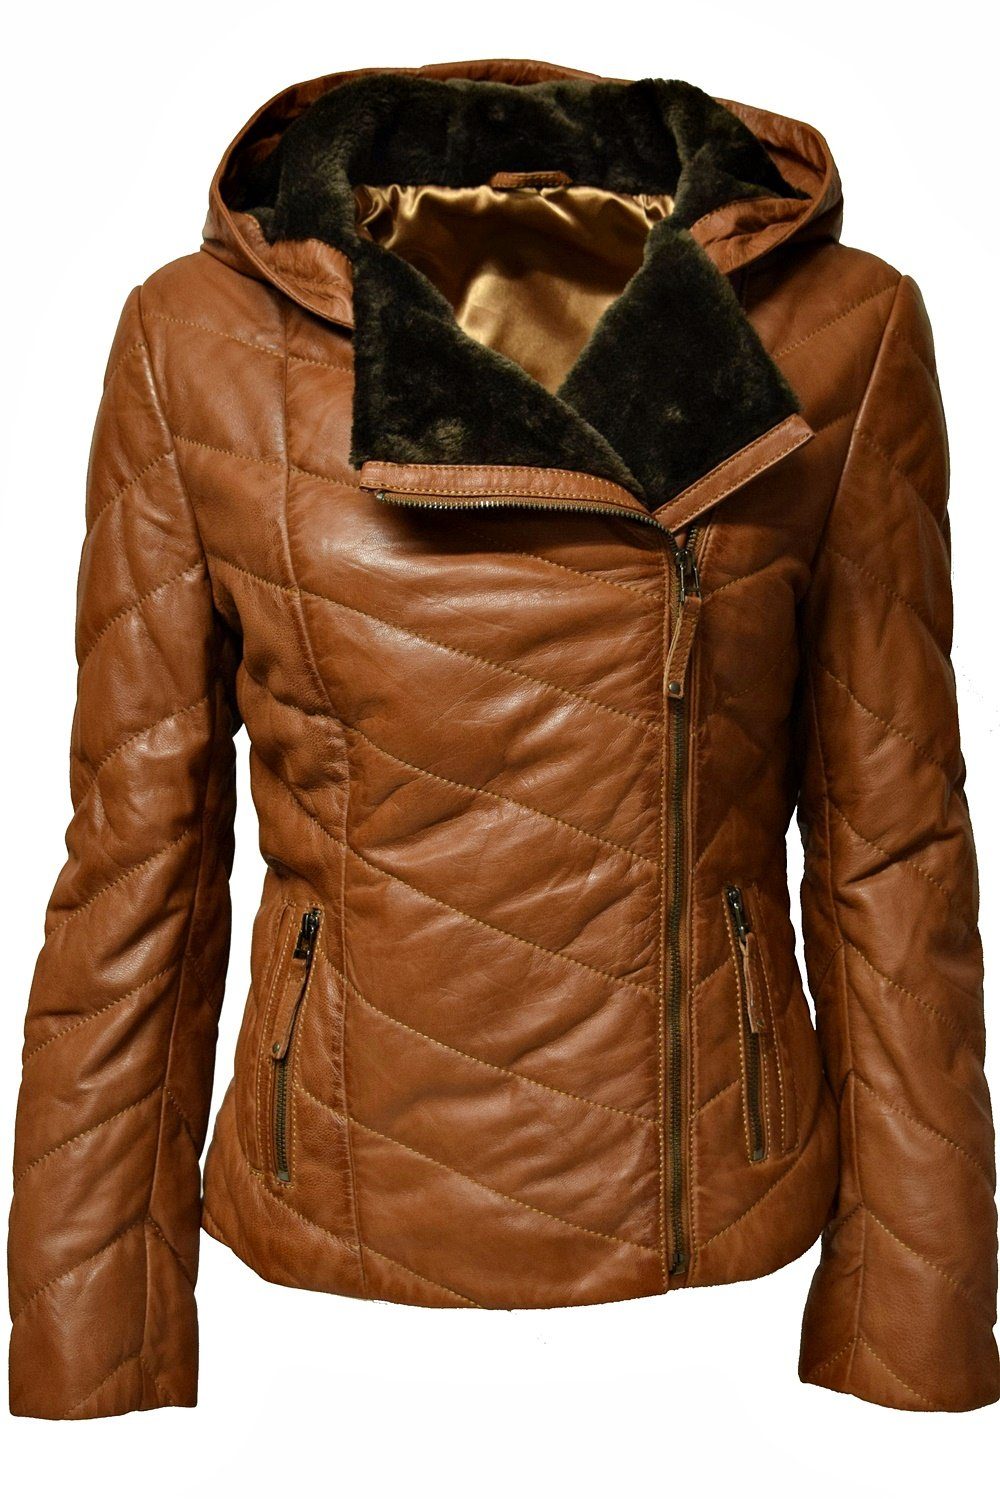 Zimmert Leather Lederjacke »Mariella« Stepp-Lederjacke aus weichem Leder  mit Kapuze online kaufen | OTTO